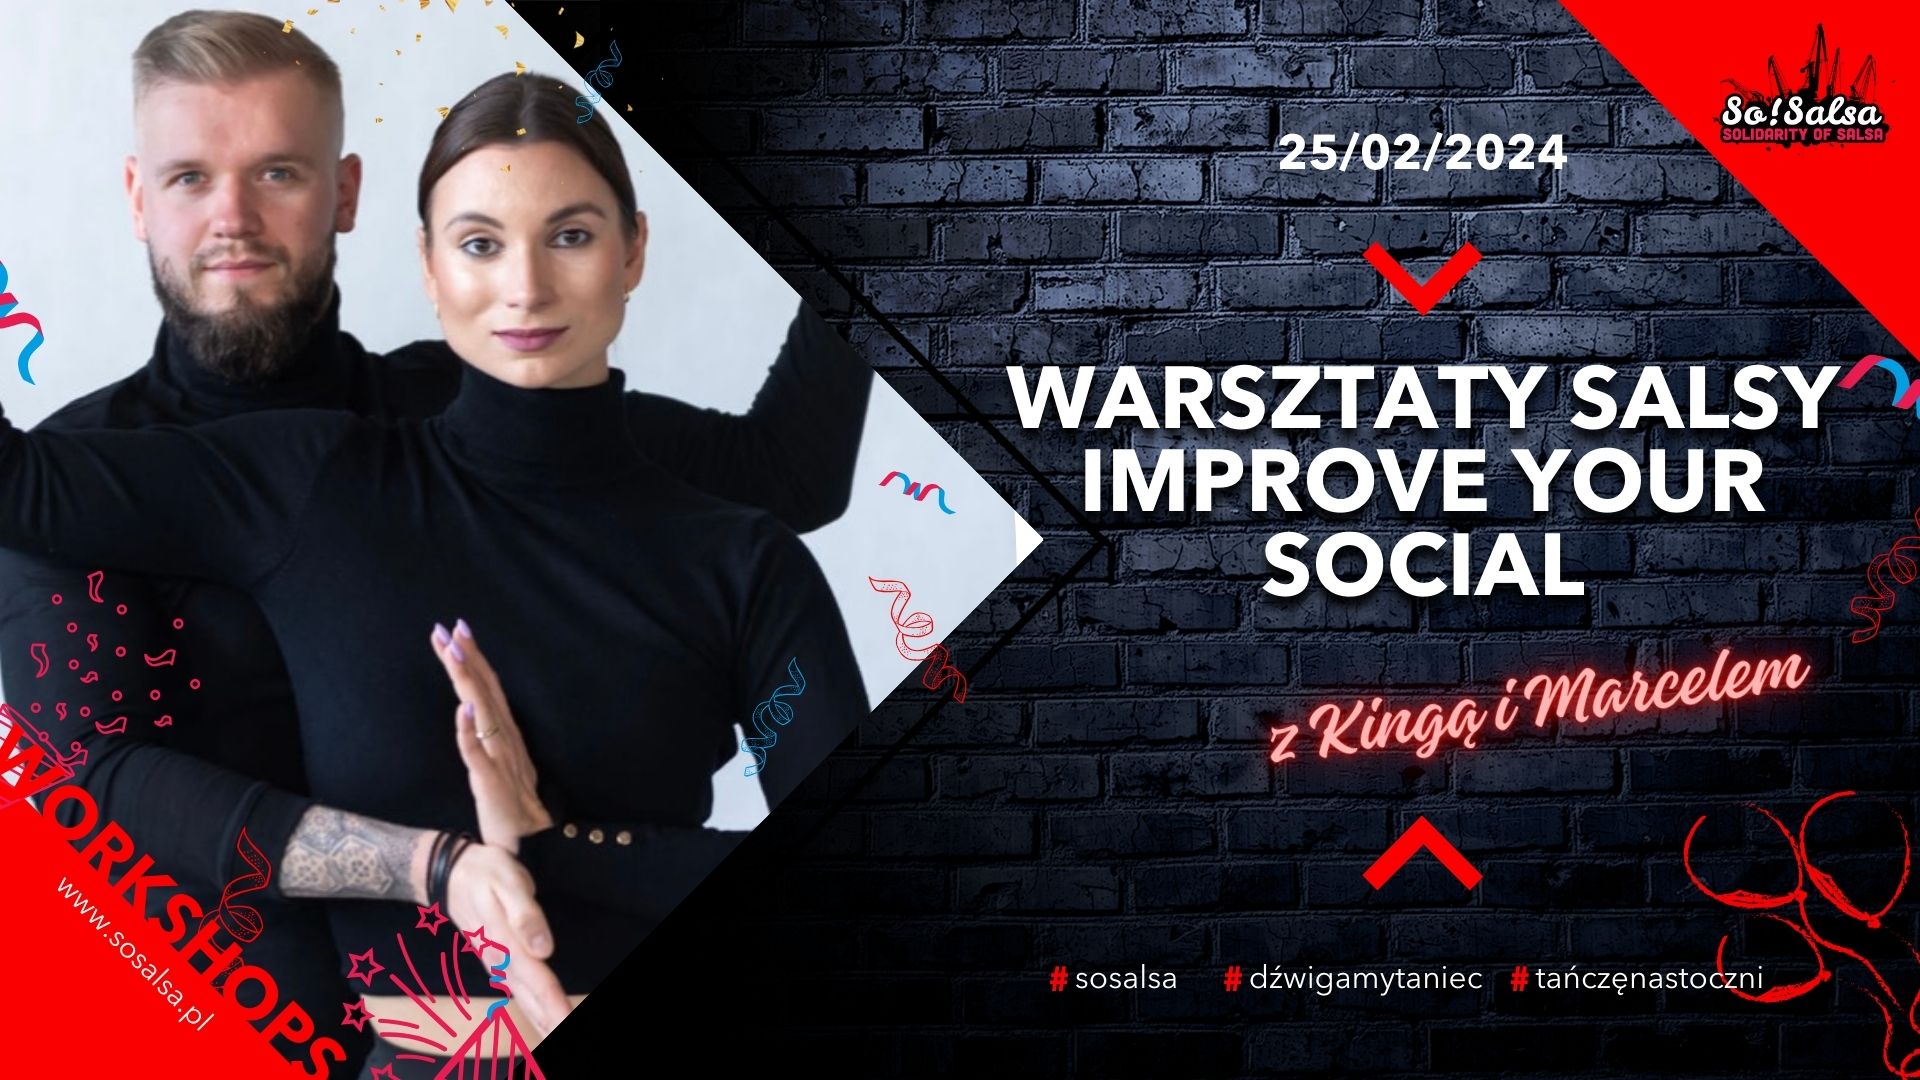 Warsztaty z Kingą i Marcelem - Improve your social! 